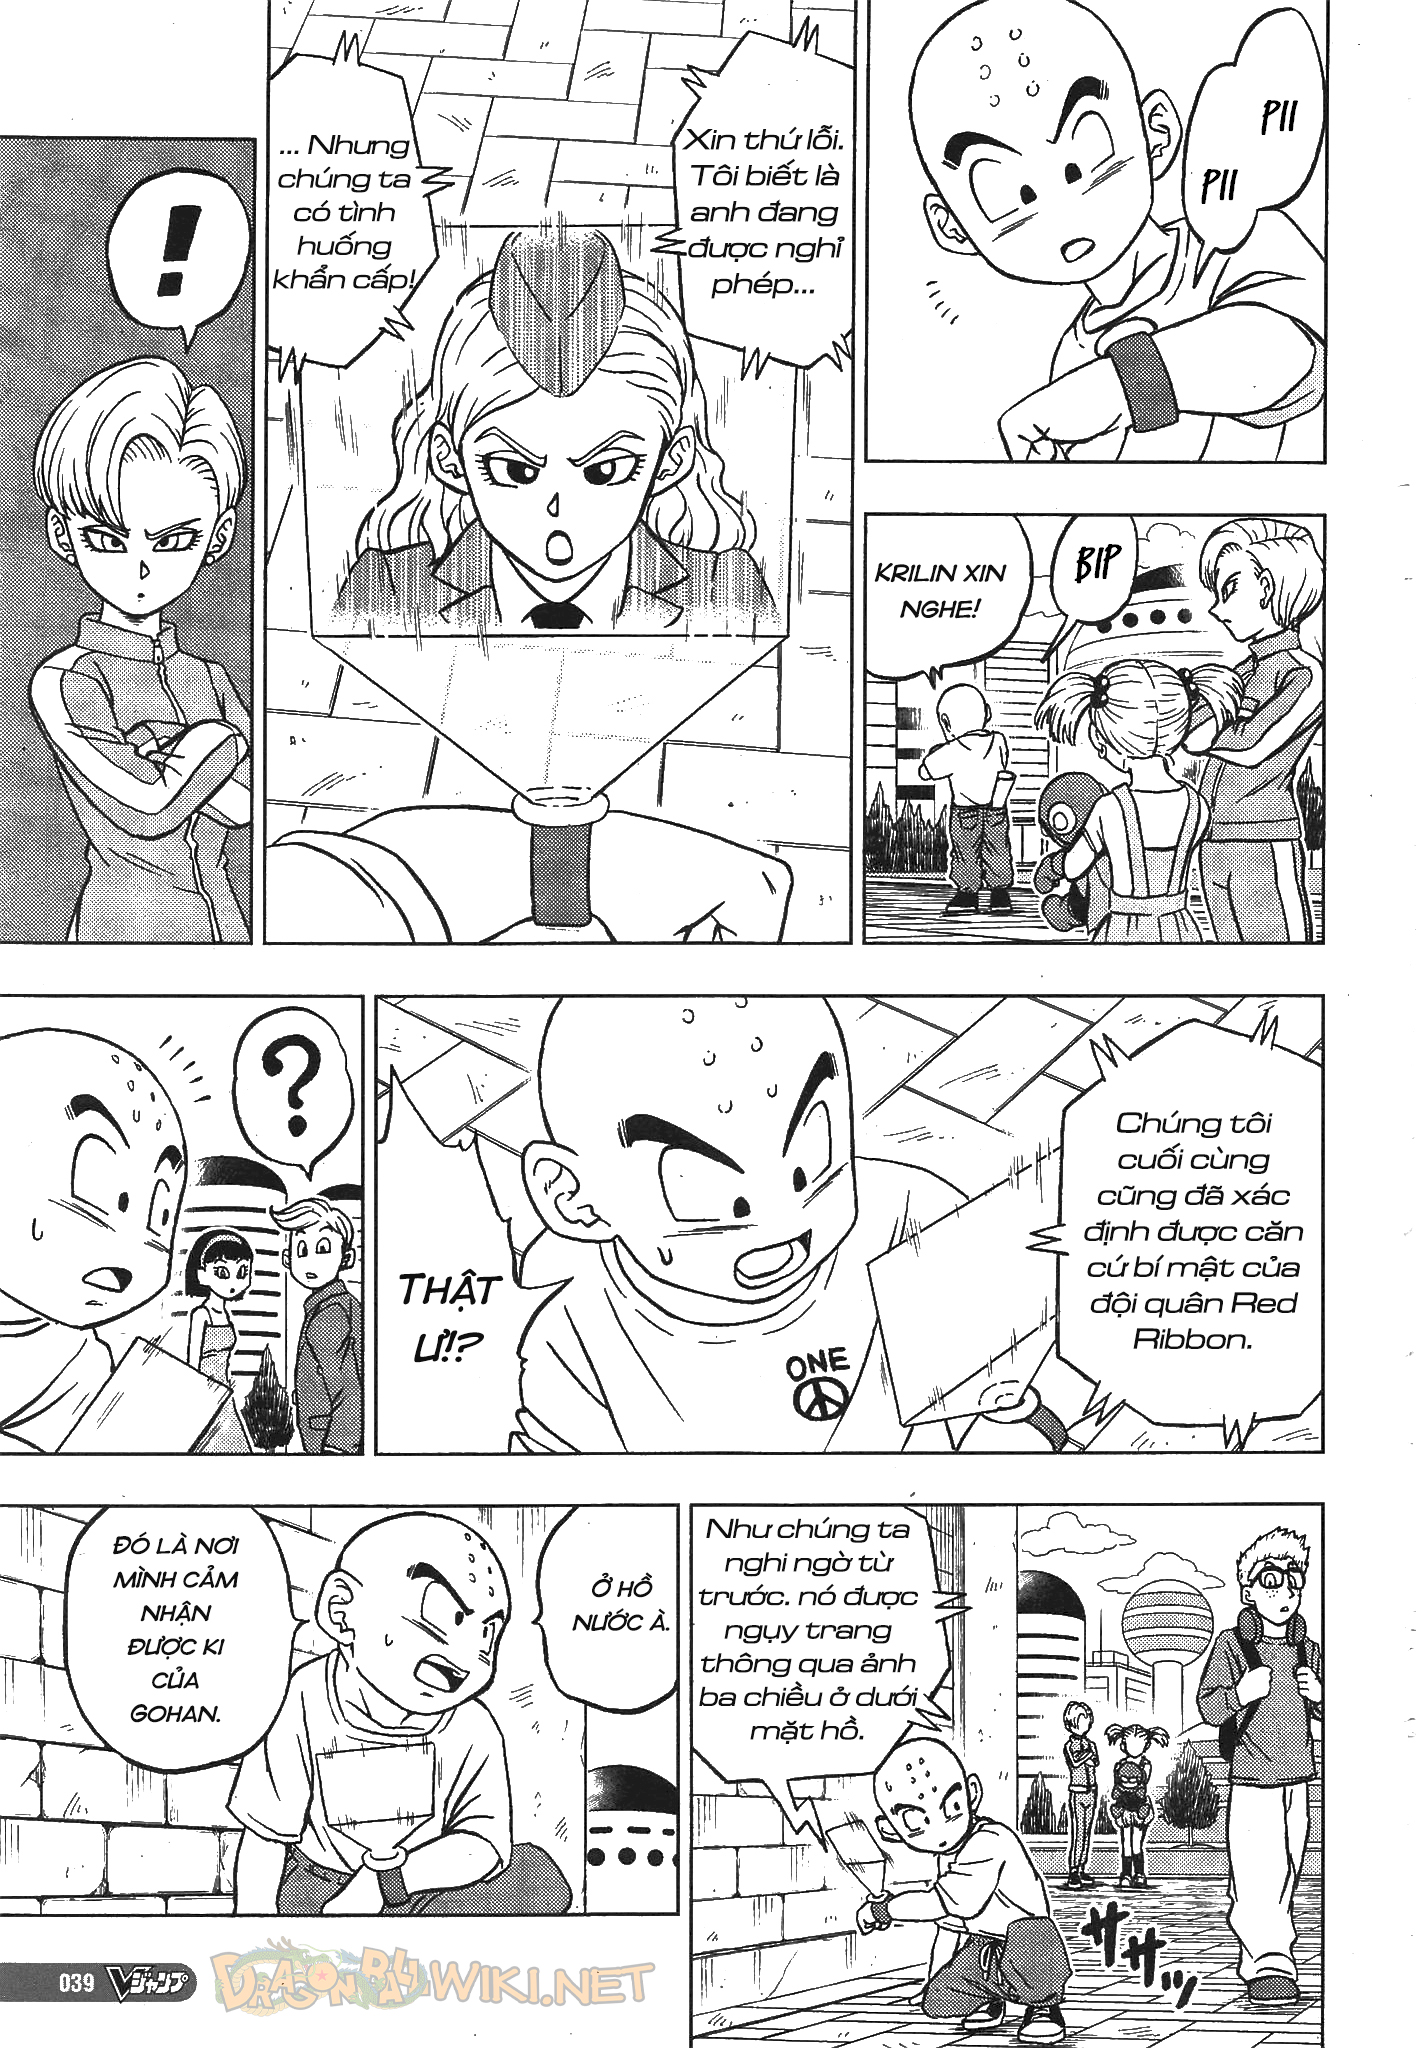 Trang 3 - Dragon Ball Super 51